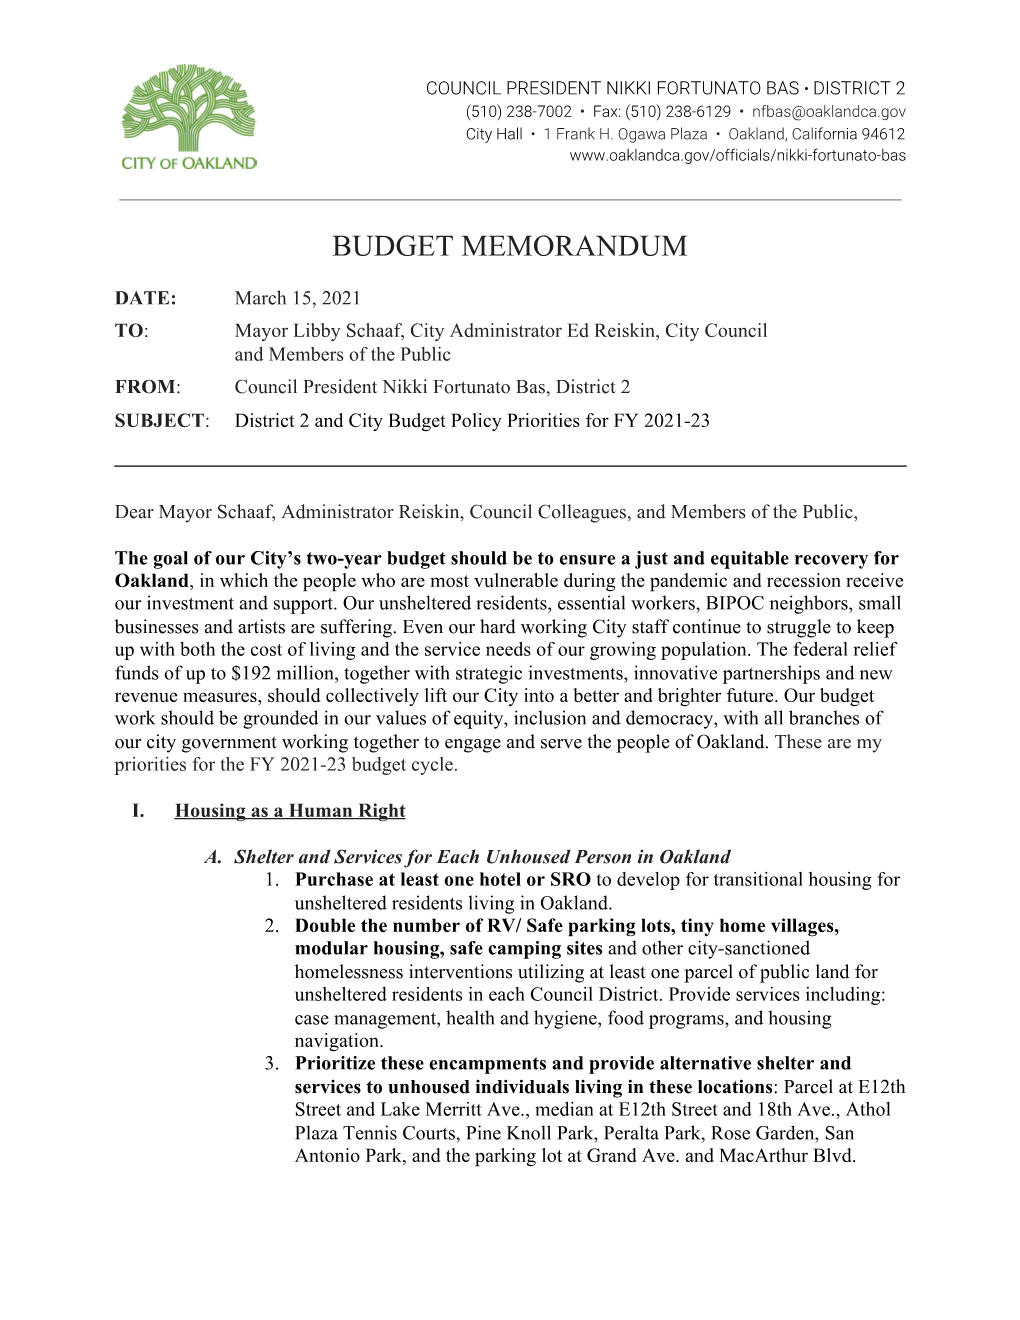 Budget Memorandum